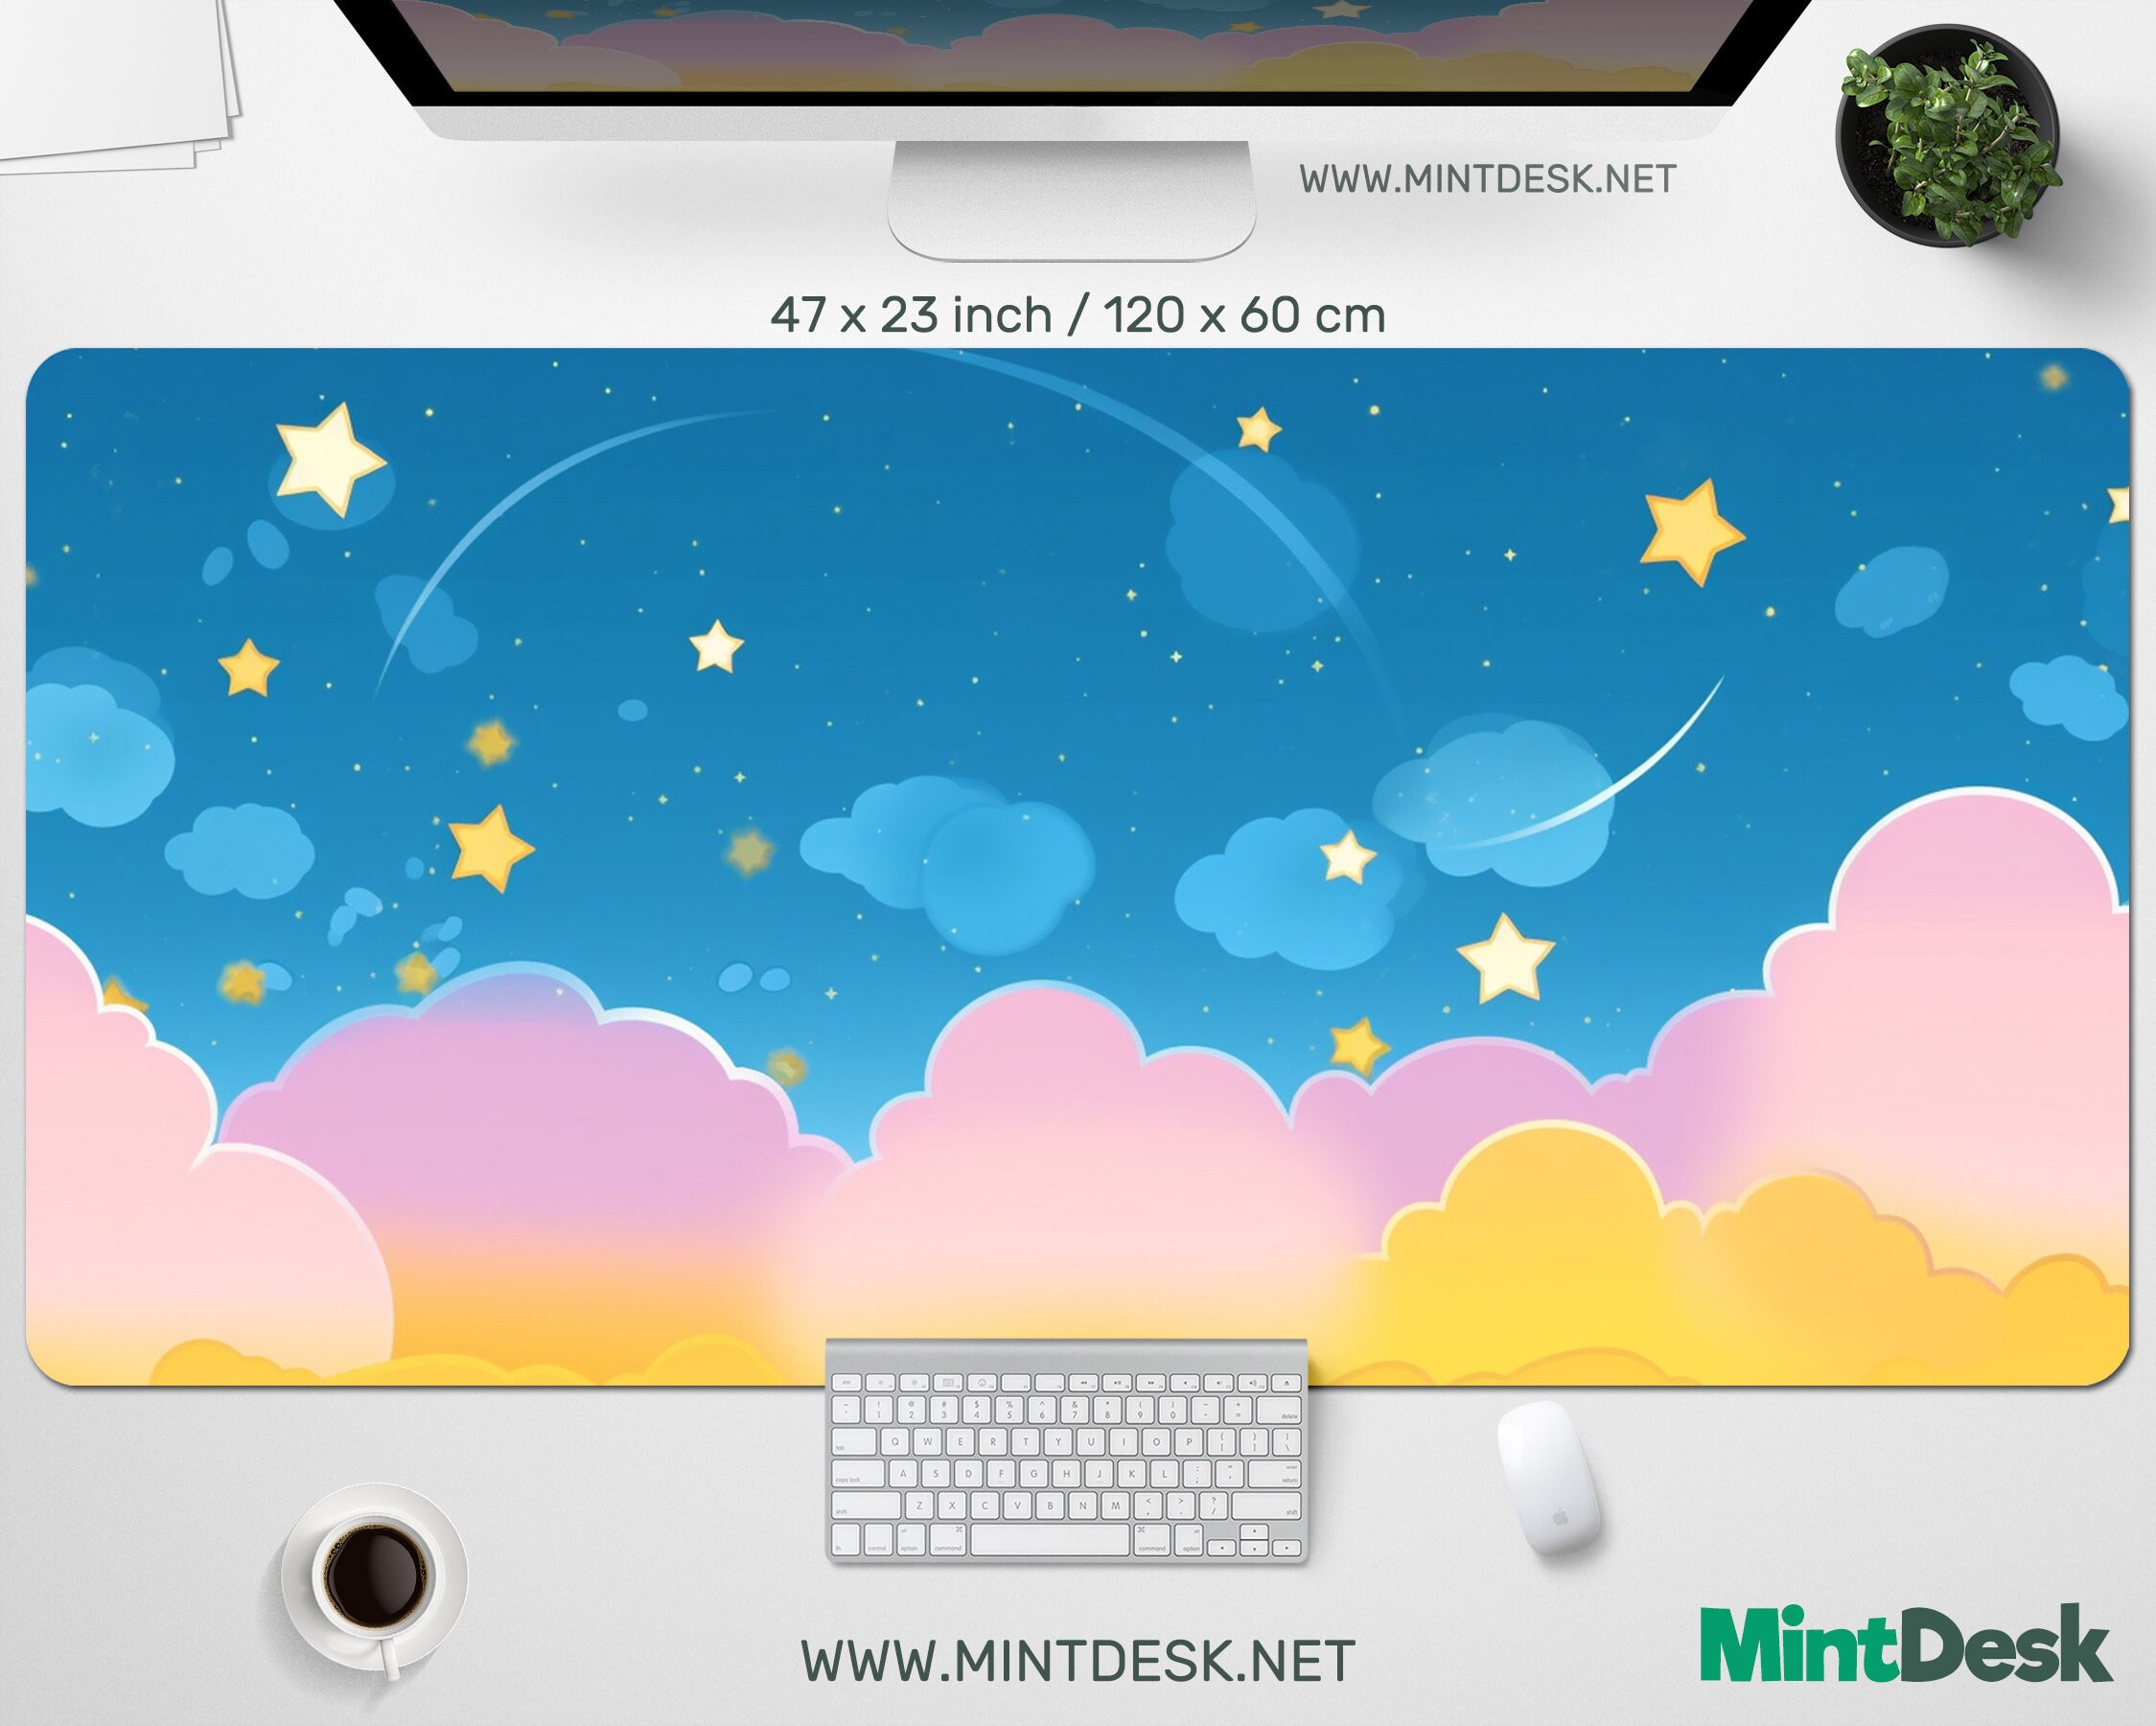 AzurePads Space Gamer deskpad